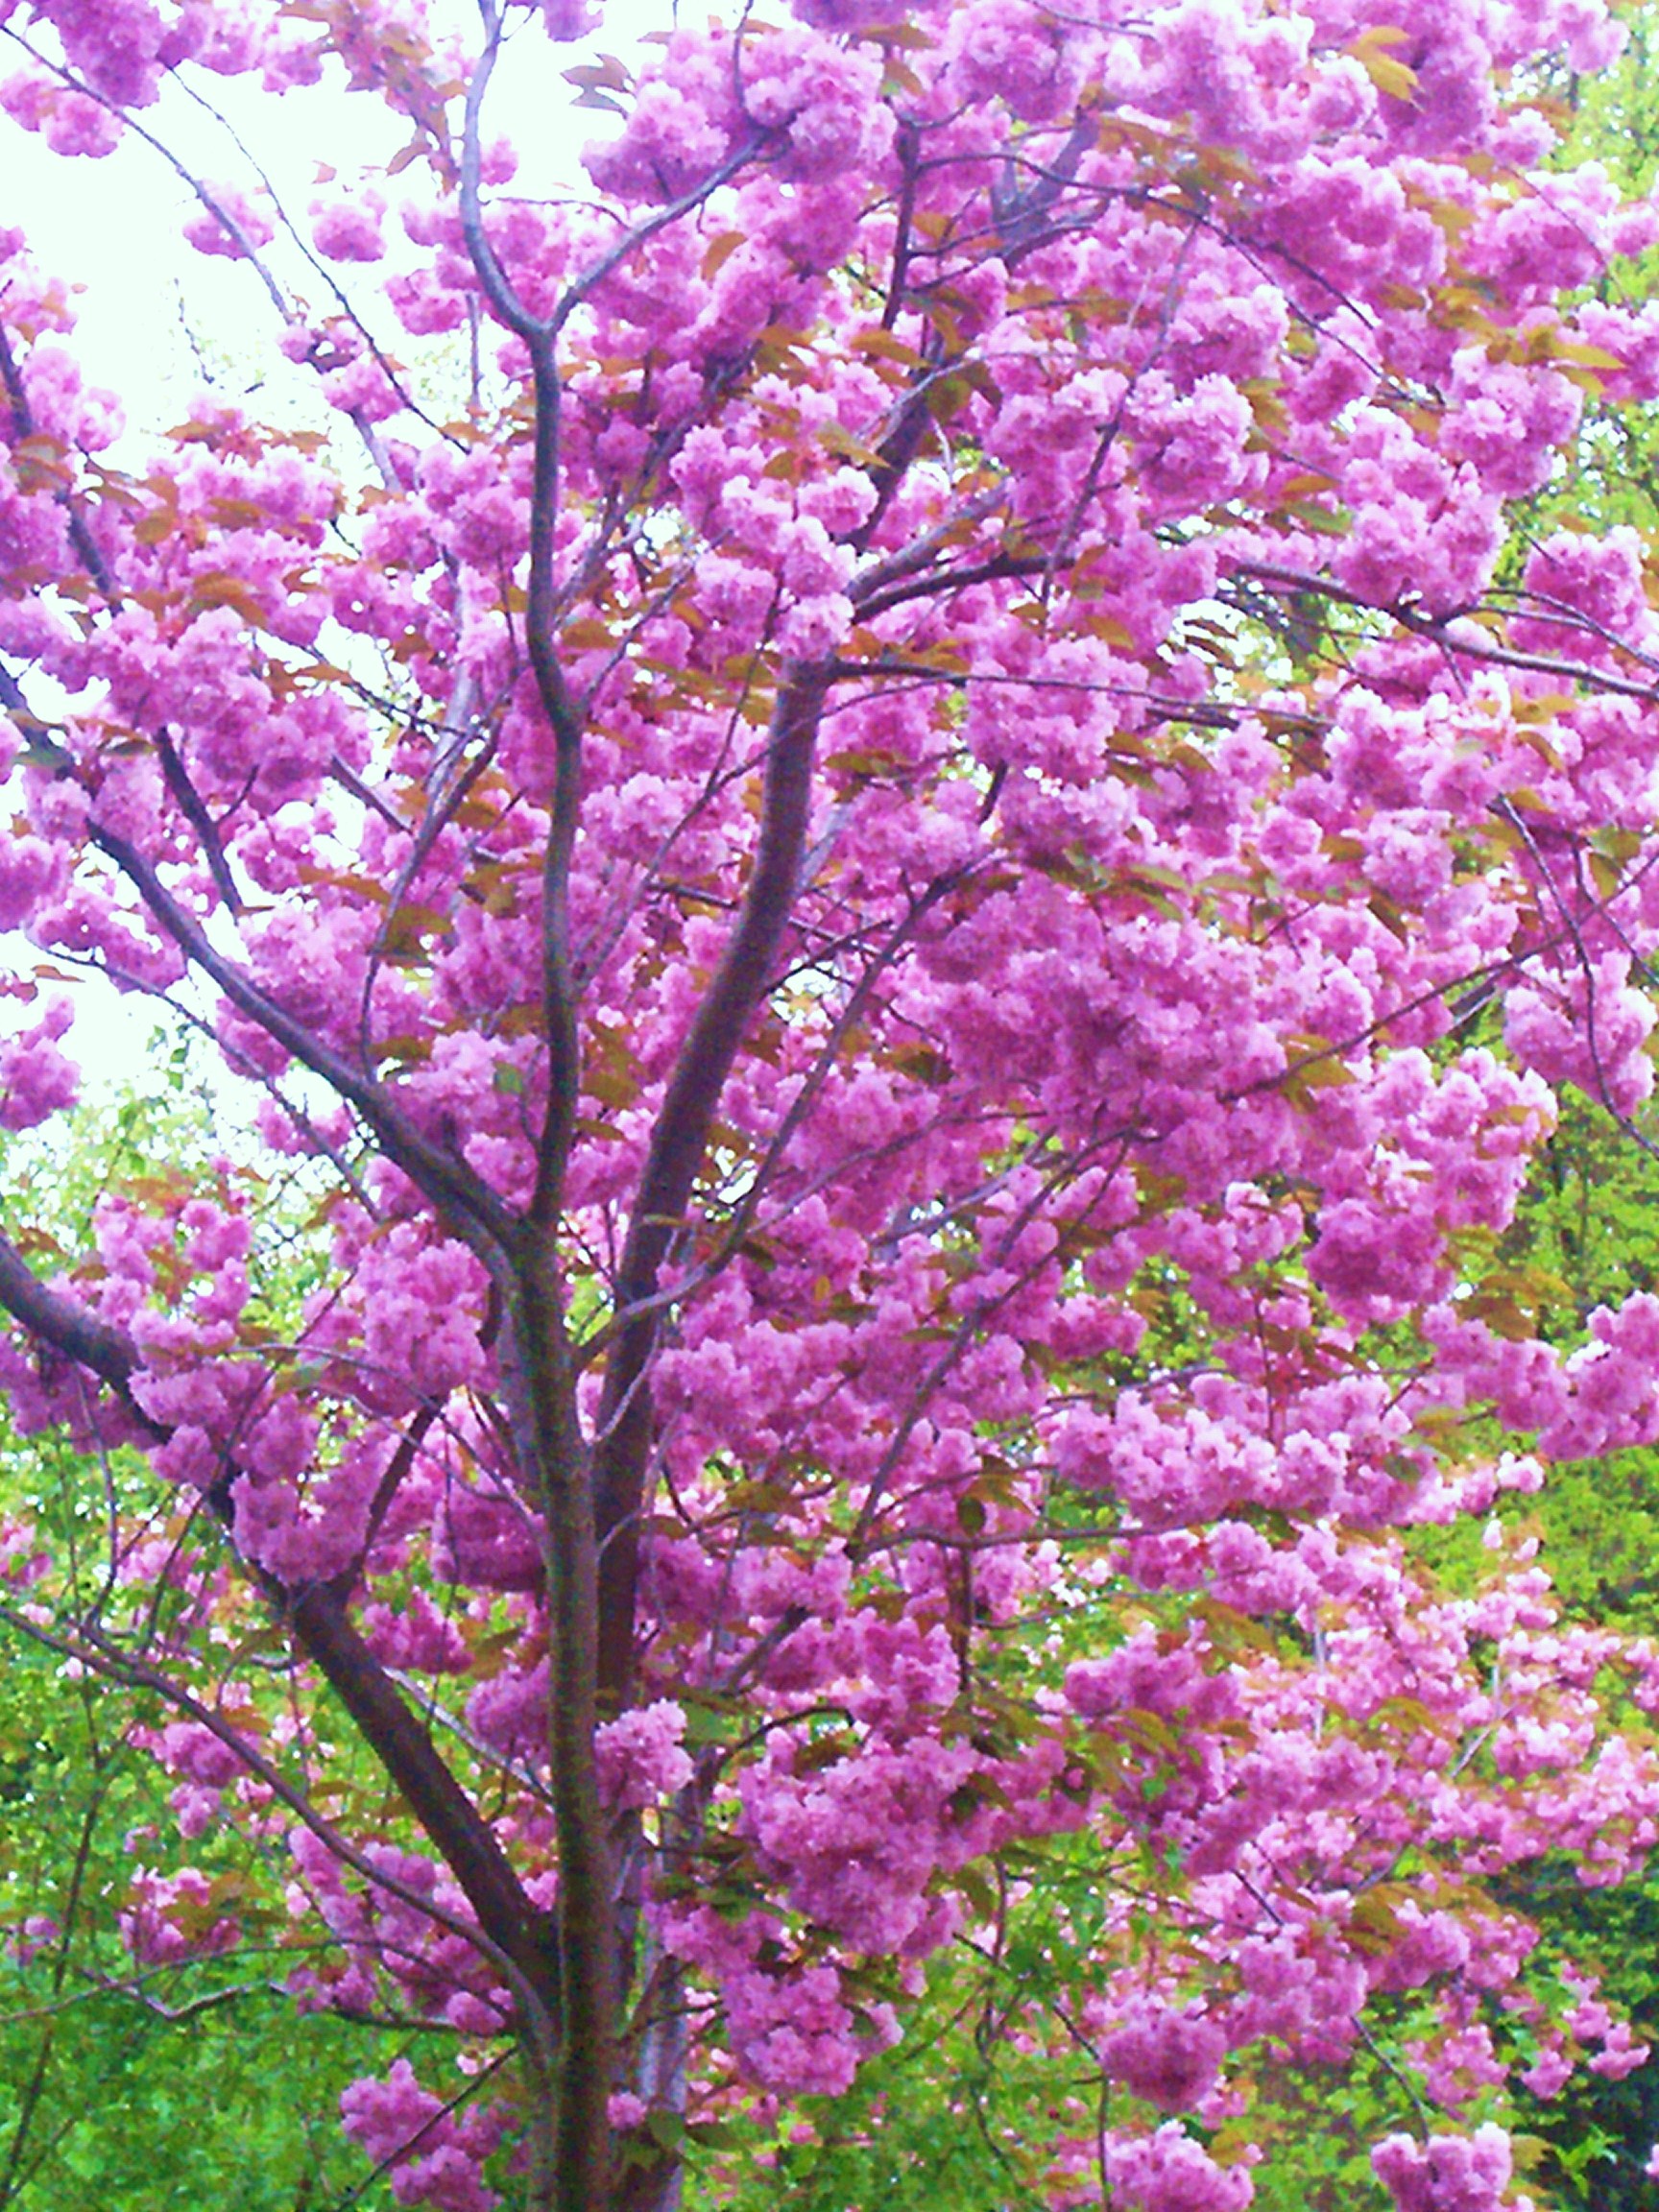 File:Blooming tree.JPG - Wikimedia Commons